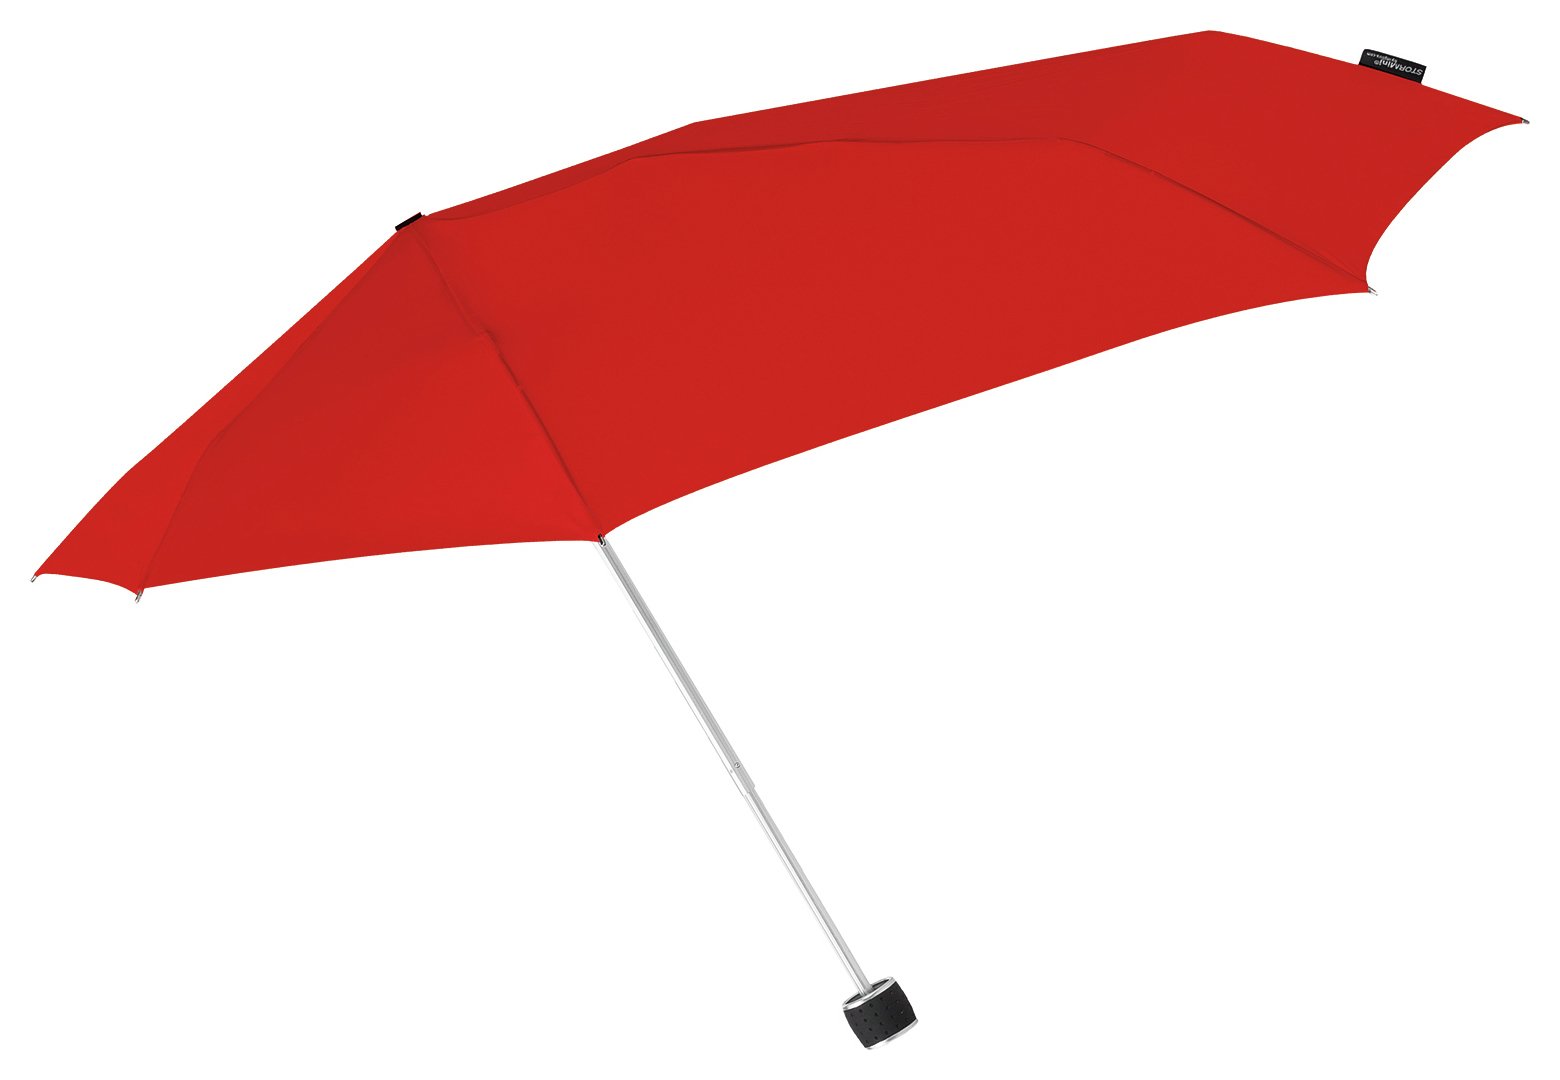 Stealthbomber Folding Umbrella - Red.